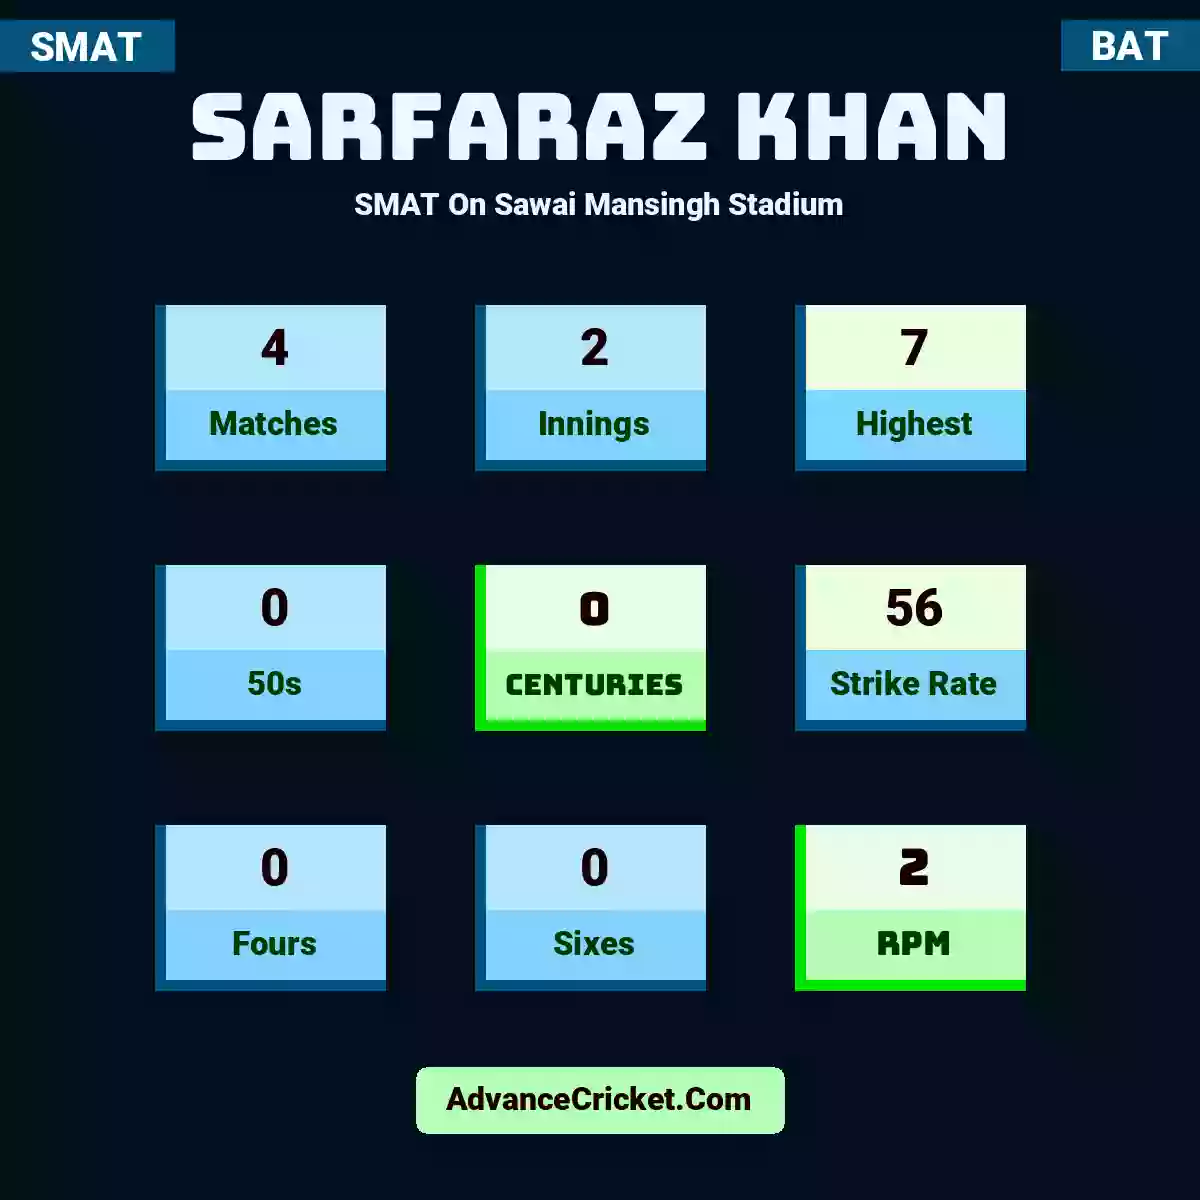 Sarfaraz Khan SMAT  On Sawai Mansingh Stadium, Sarfaraz Khan played 4 matches, scored 7 runs as highest, 0 half-centuries, and 0 centuries, with a strike rate of 56. S.Khan hit 0 fours and 0 sixes, with an RPM of 2.